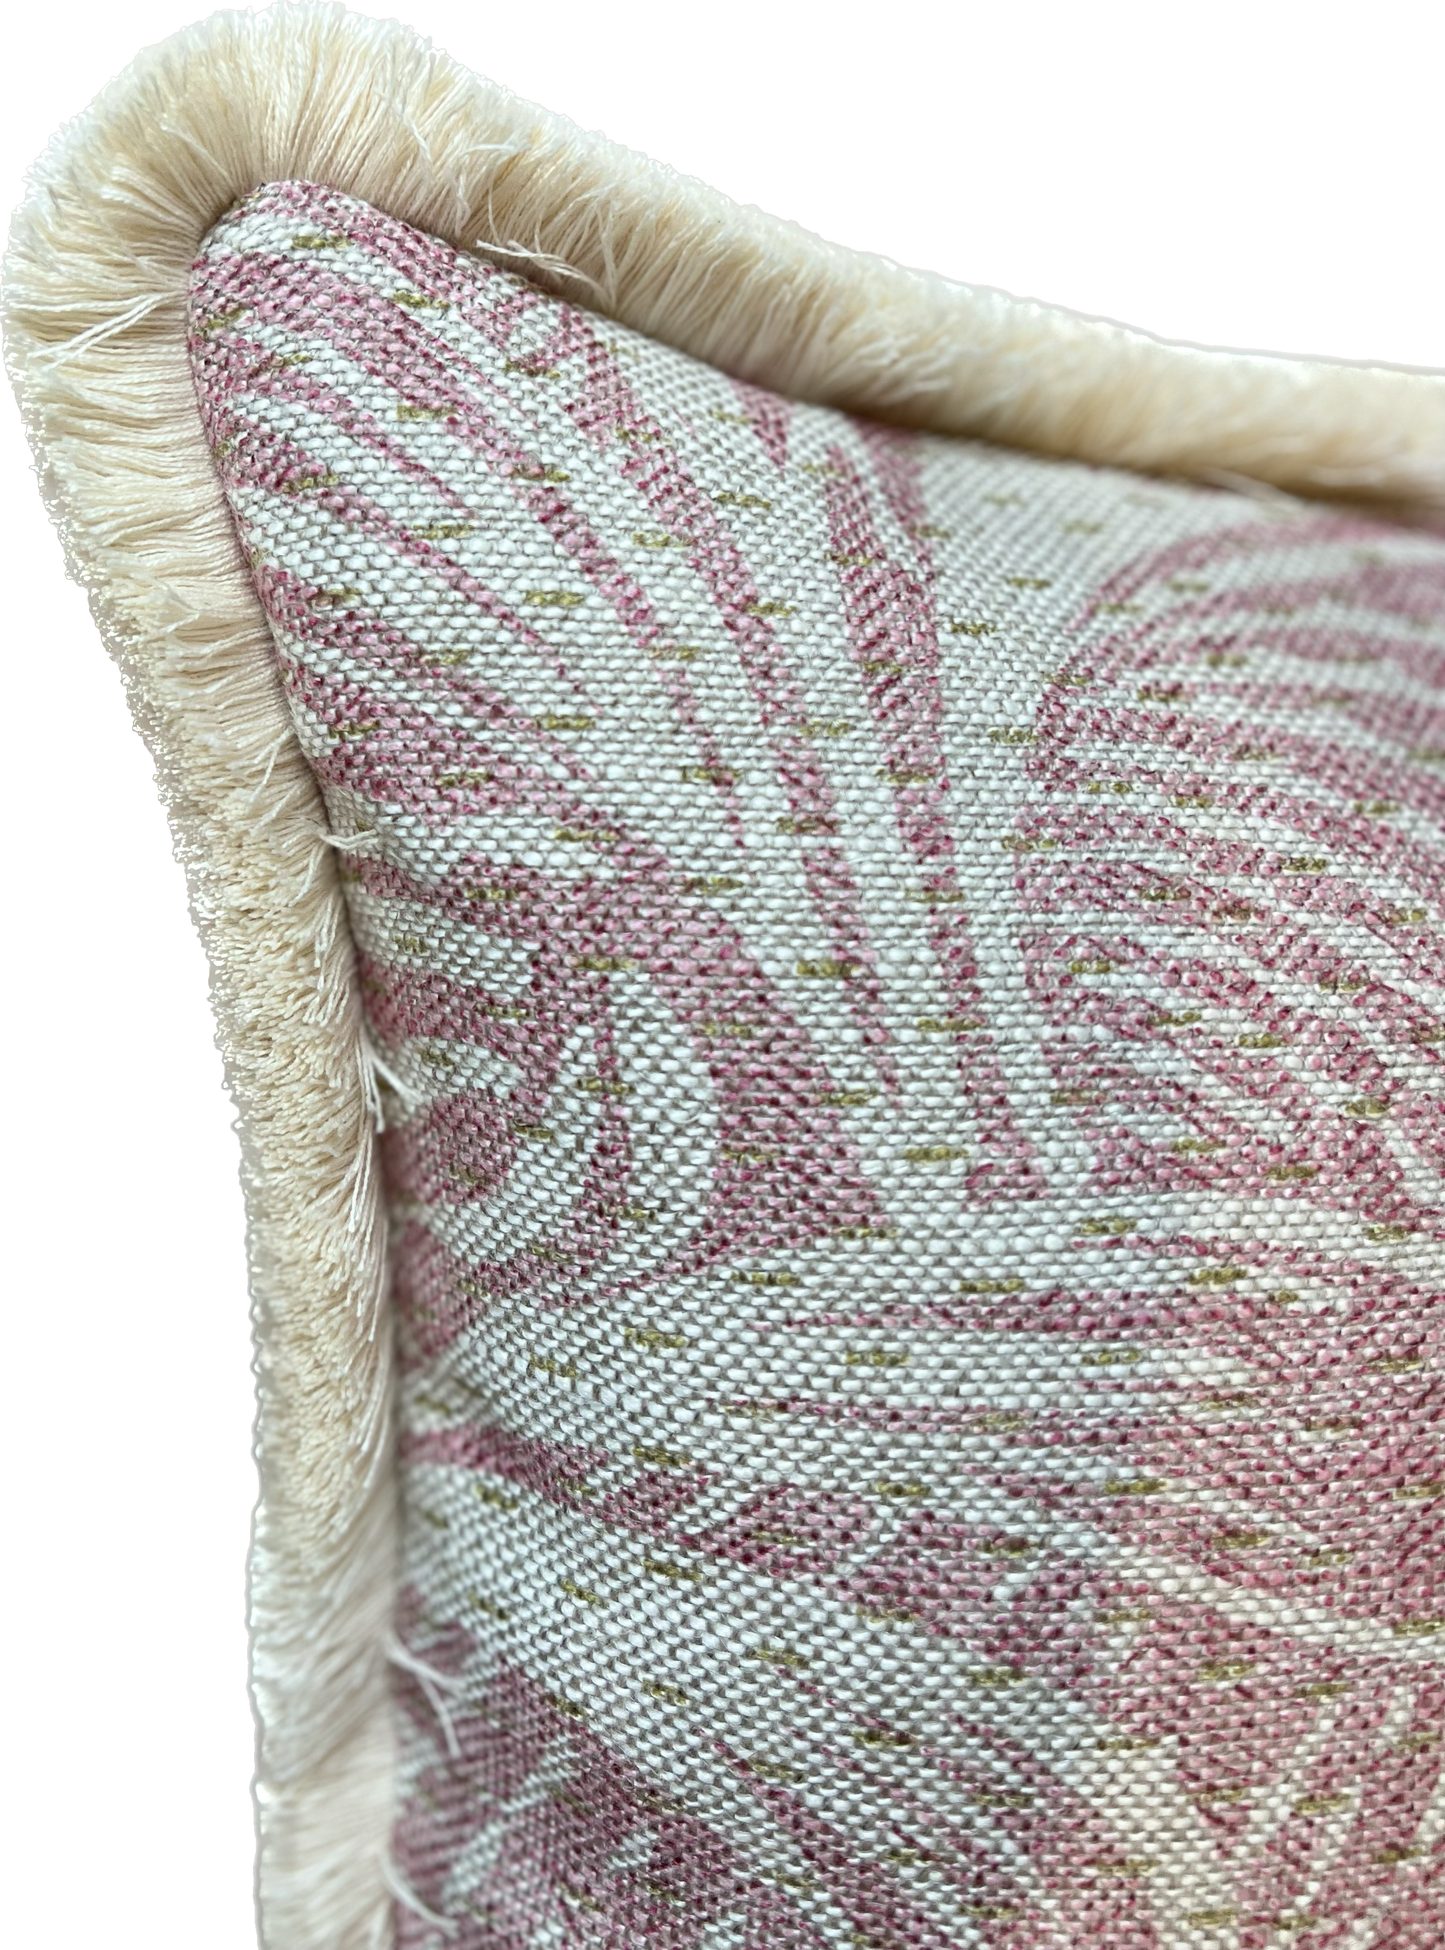 Fermoie Cushions - Luxury cushions in Fermoie Fabric (Savernake)